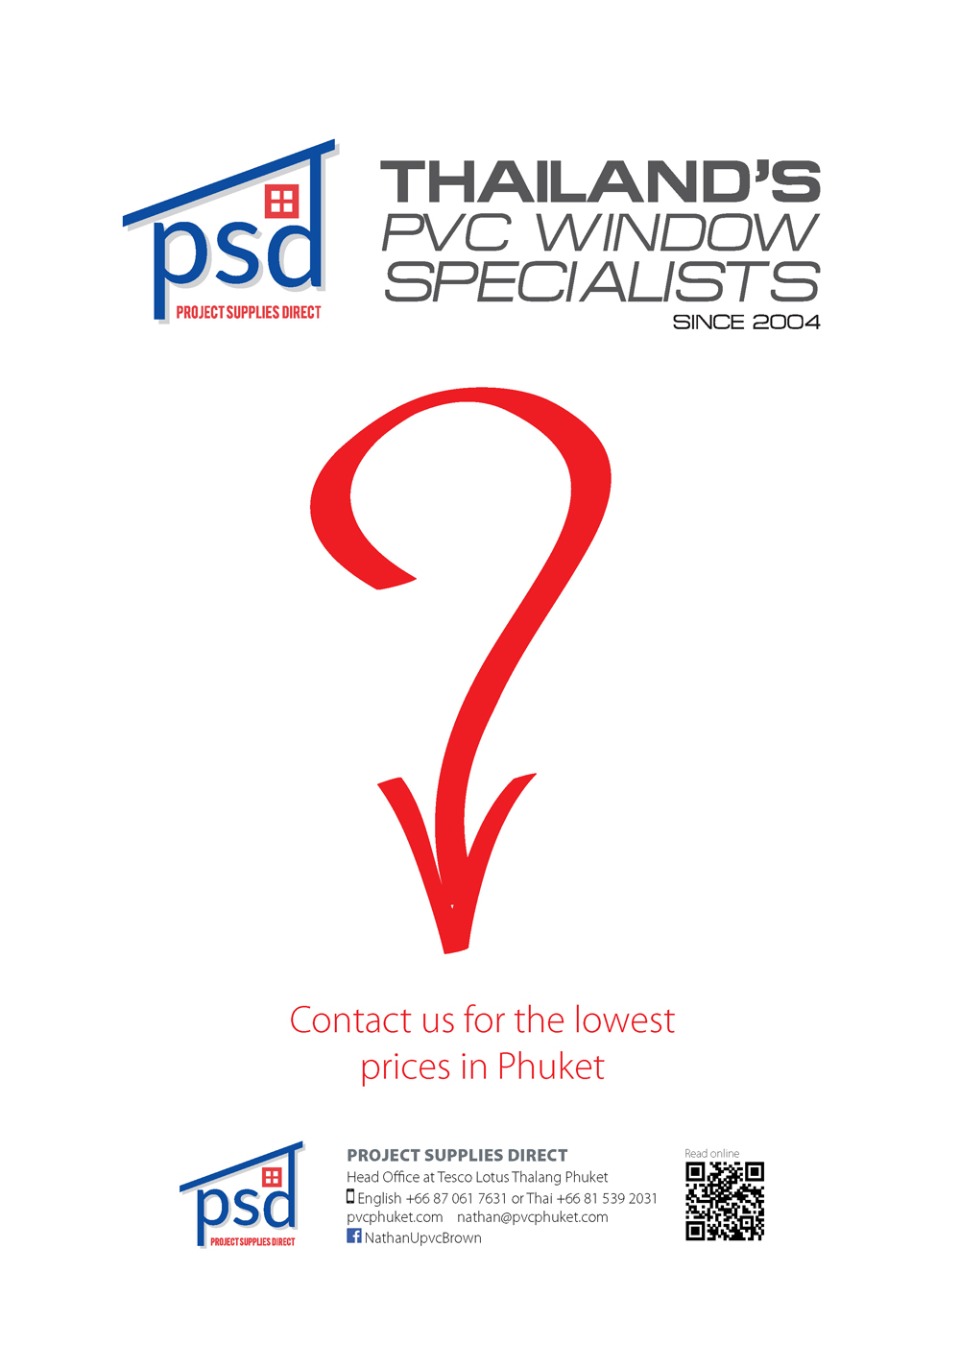 Thailand's PVC window specialists since 2004